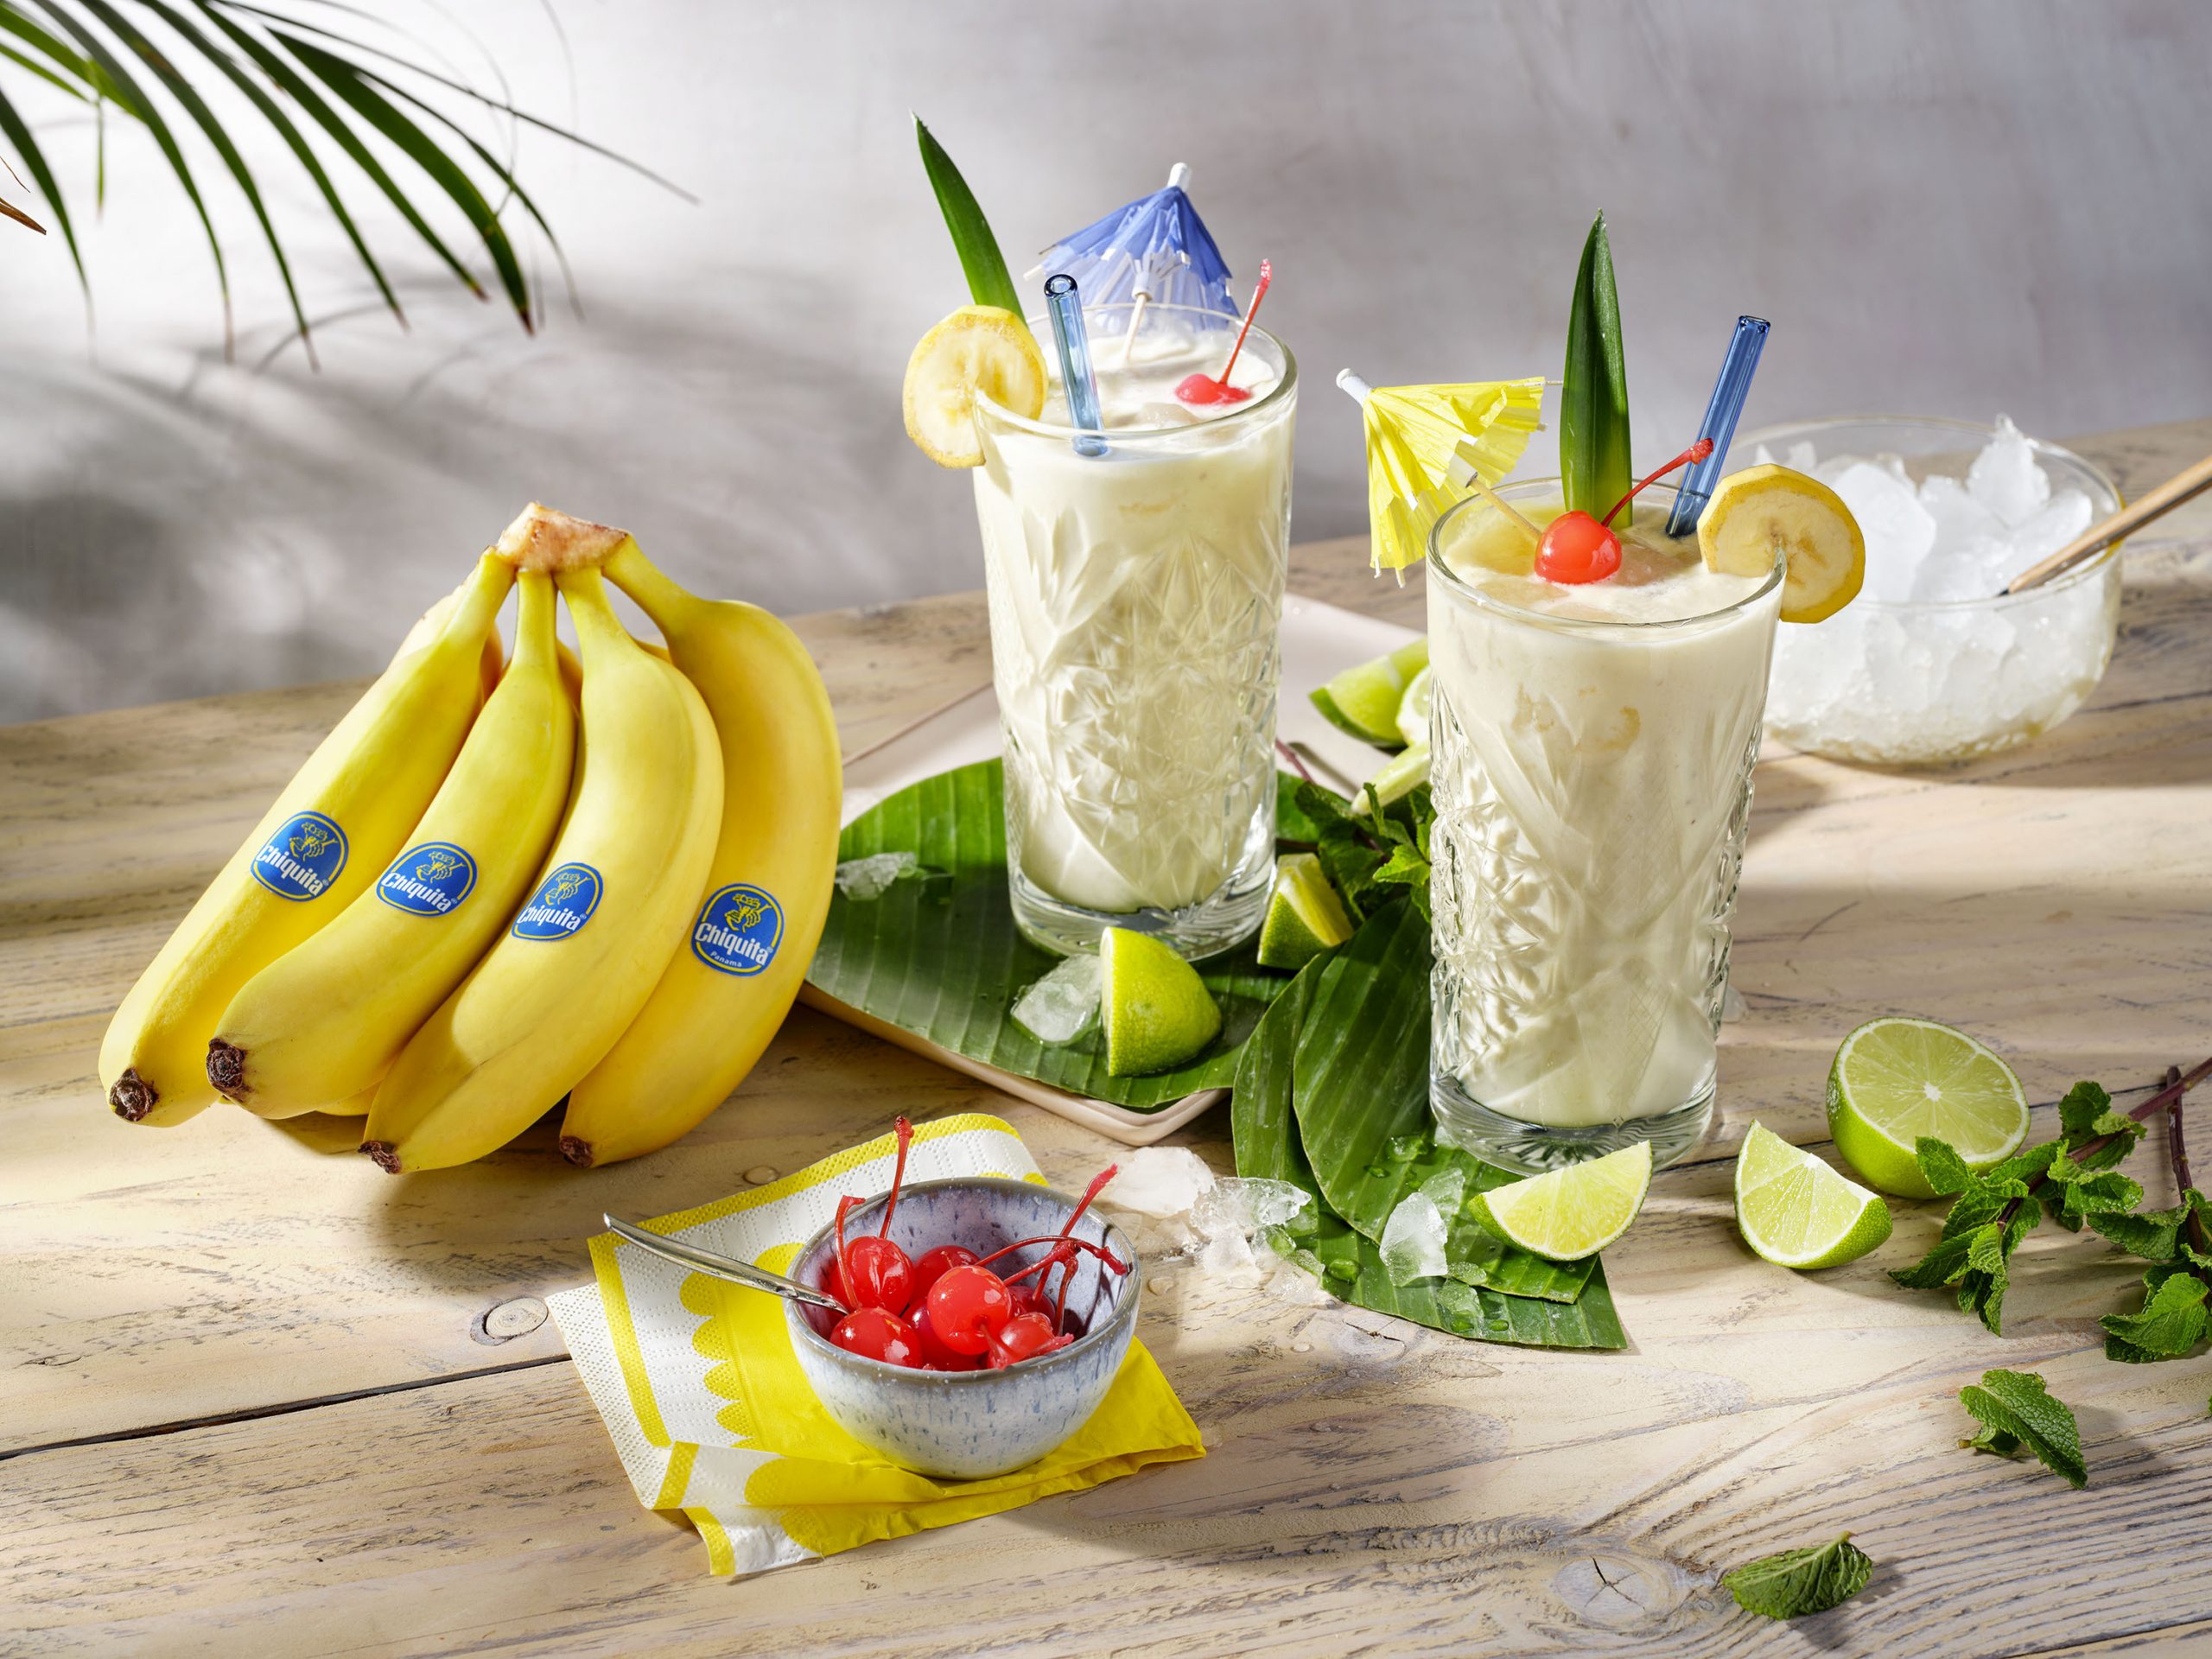 „Mocktail“ Colada mit Chiquita Bananen